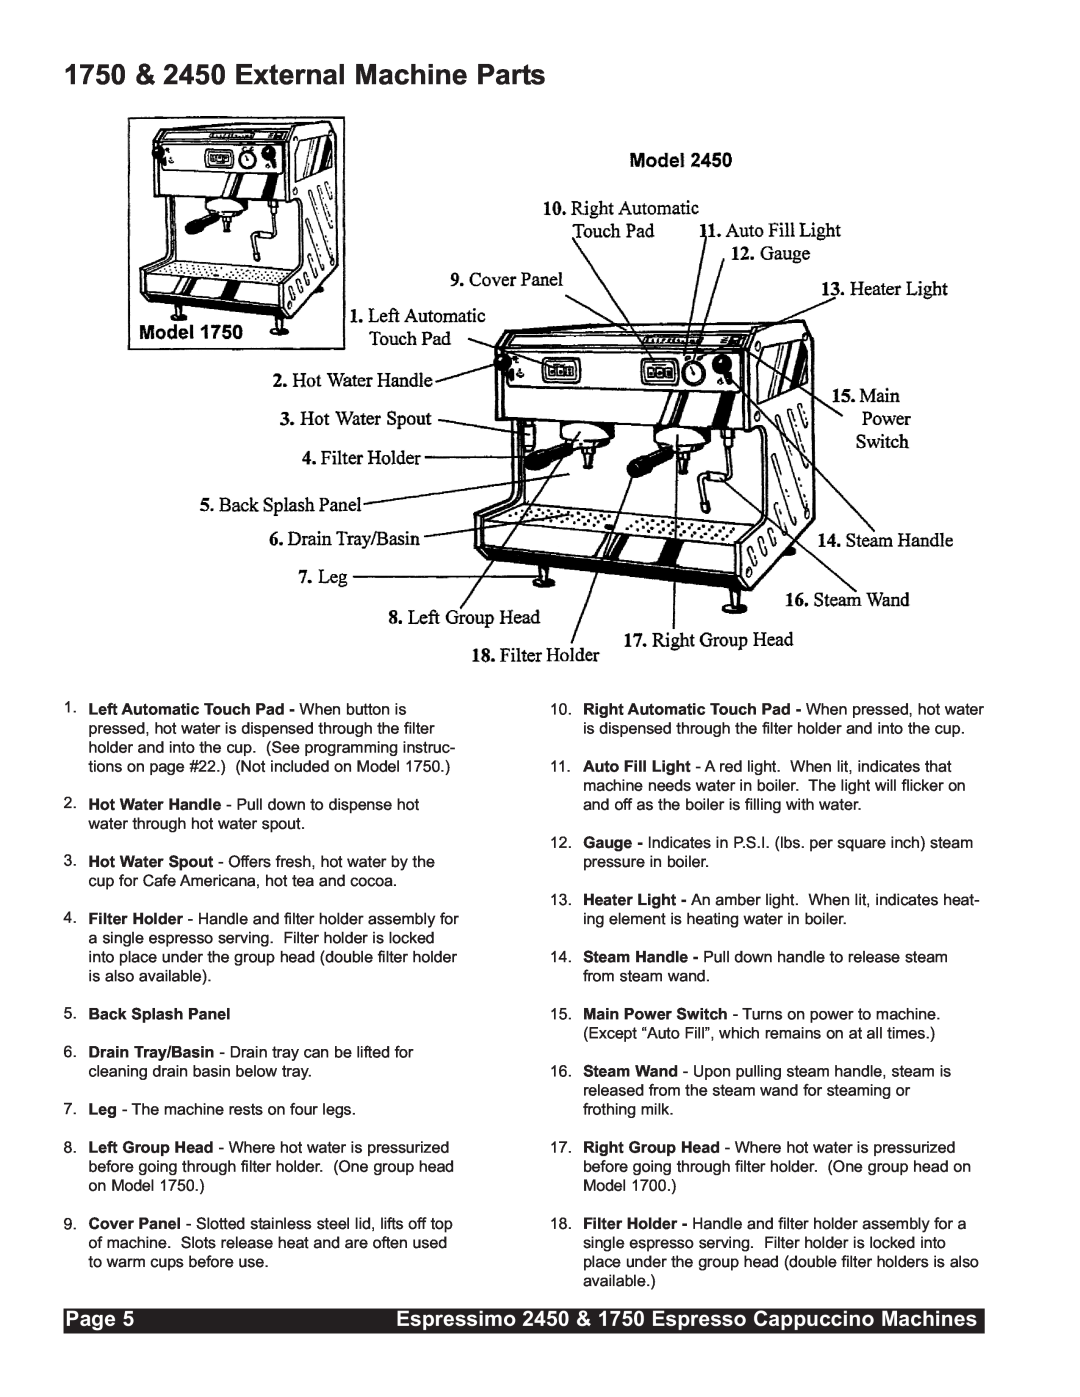 Grindmaster installation manual 1750 & 2450 External Machine Parts, Page 